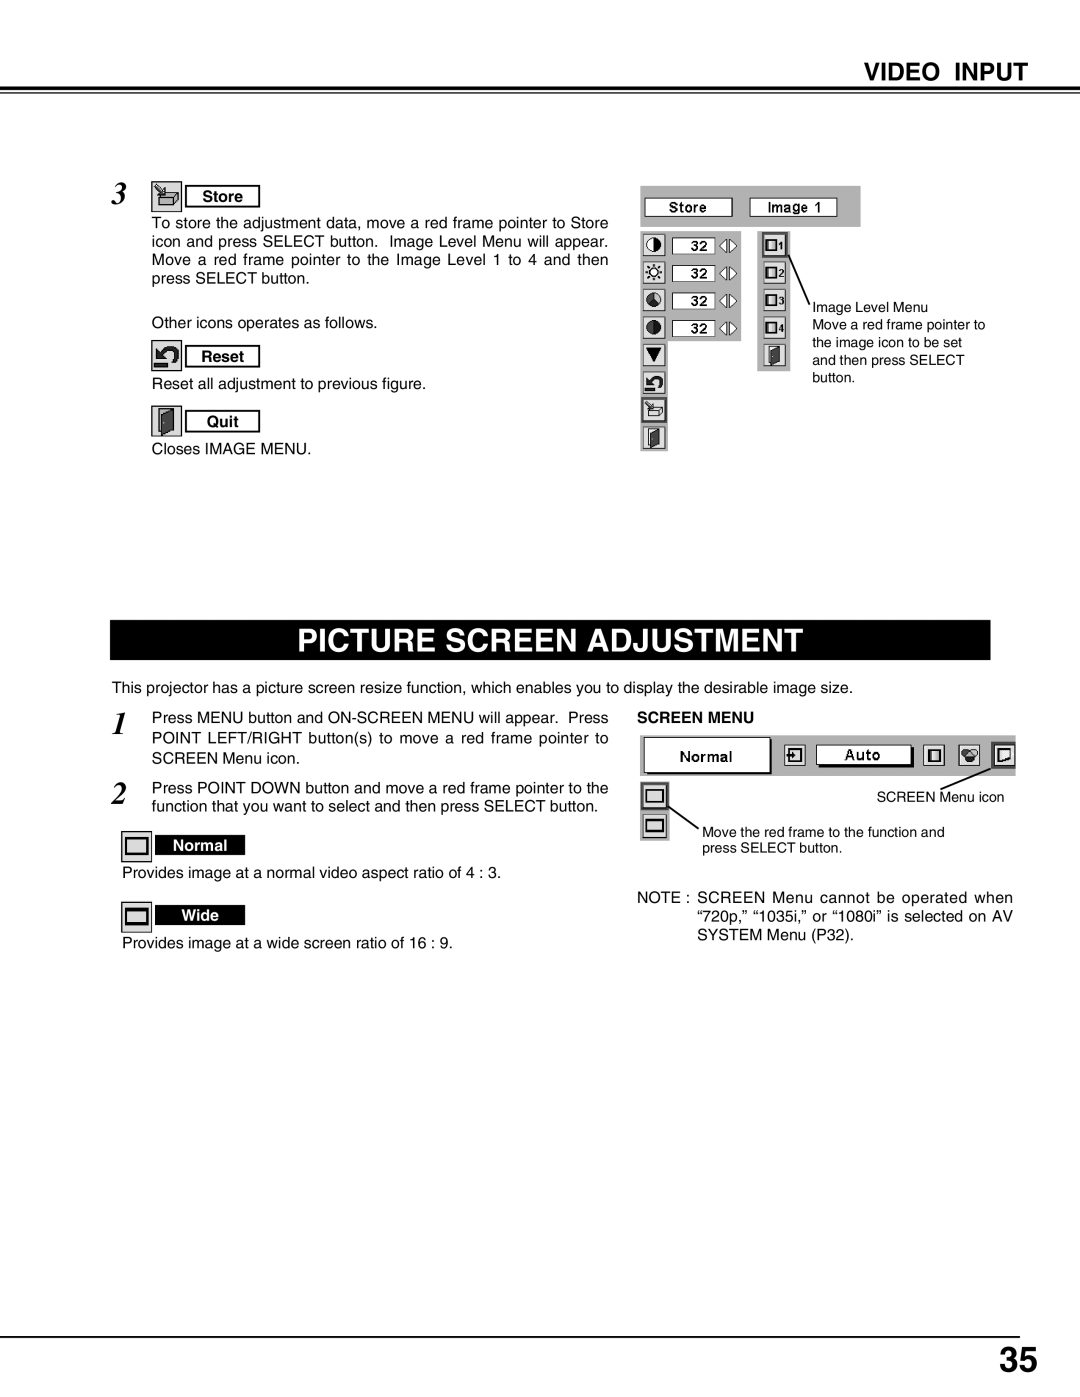 Sanyo PLC-XT16, PLC-XT11 owner manual Picture Screen Adjustment, Video Input, Store, Reset, Quit, Screen Menu 